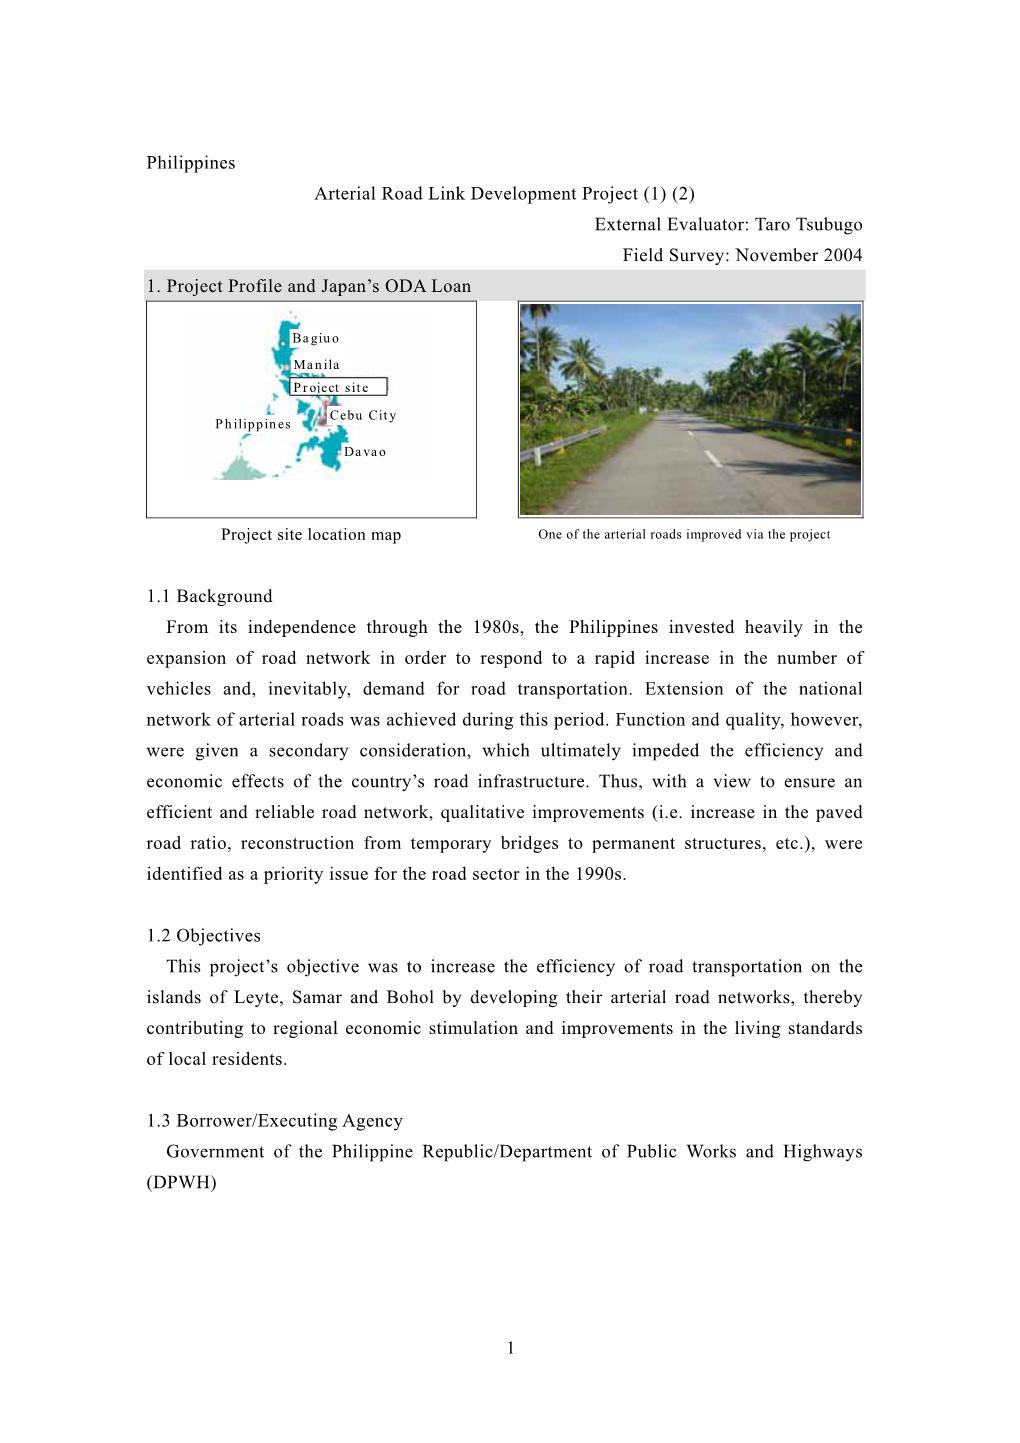 Philippines Arterial Road Link Development Project (1) (2) External Evaluator: Taro Tsubugo Field Survey: November 2004 1